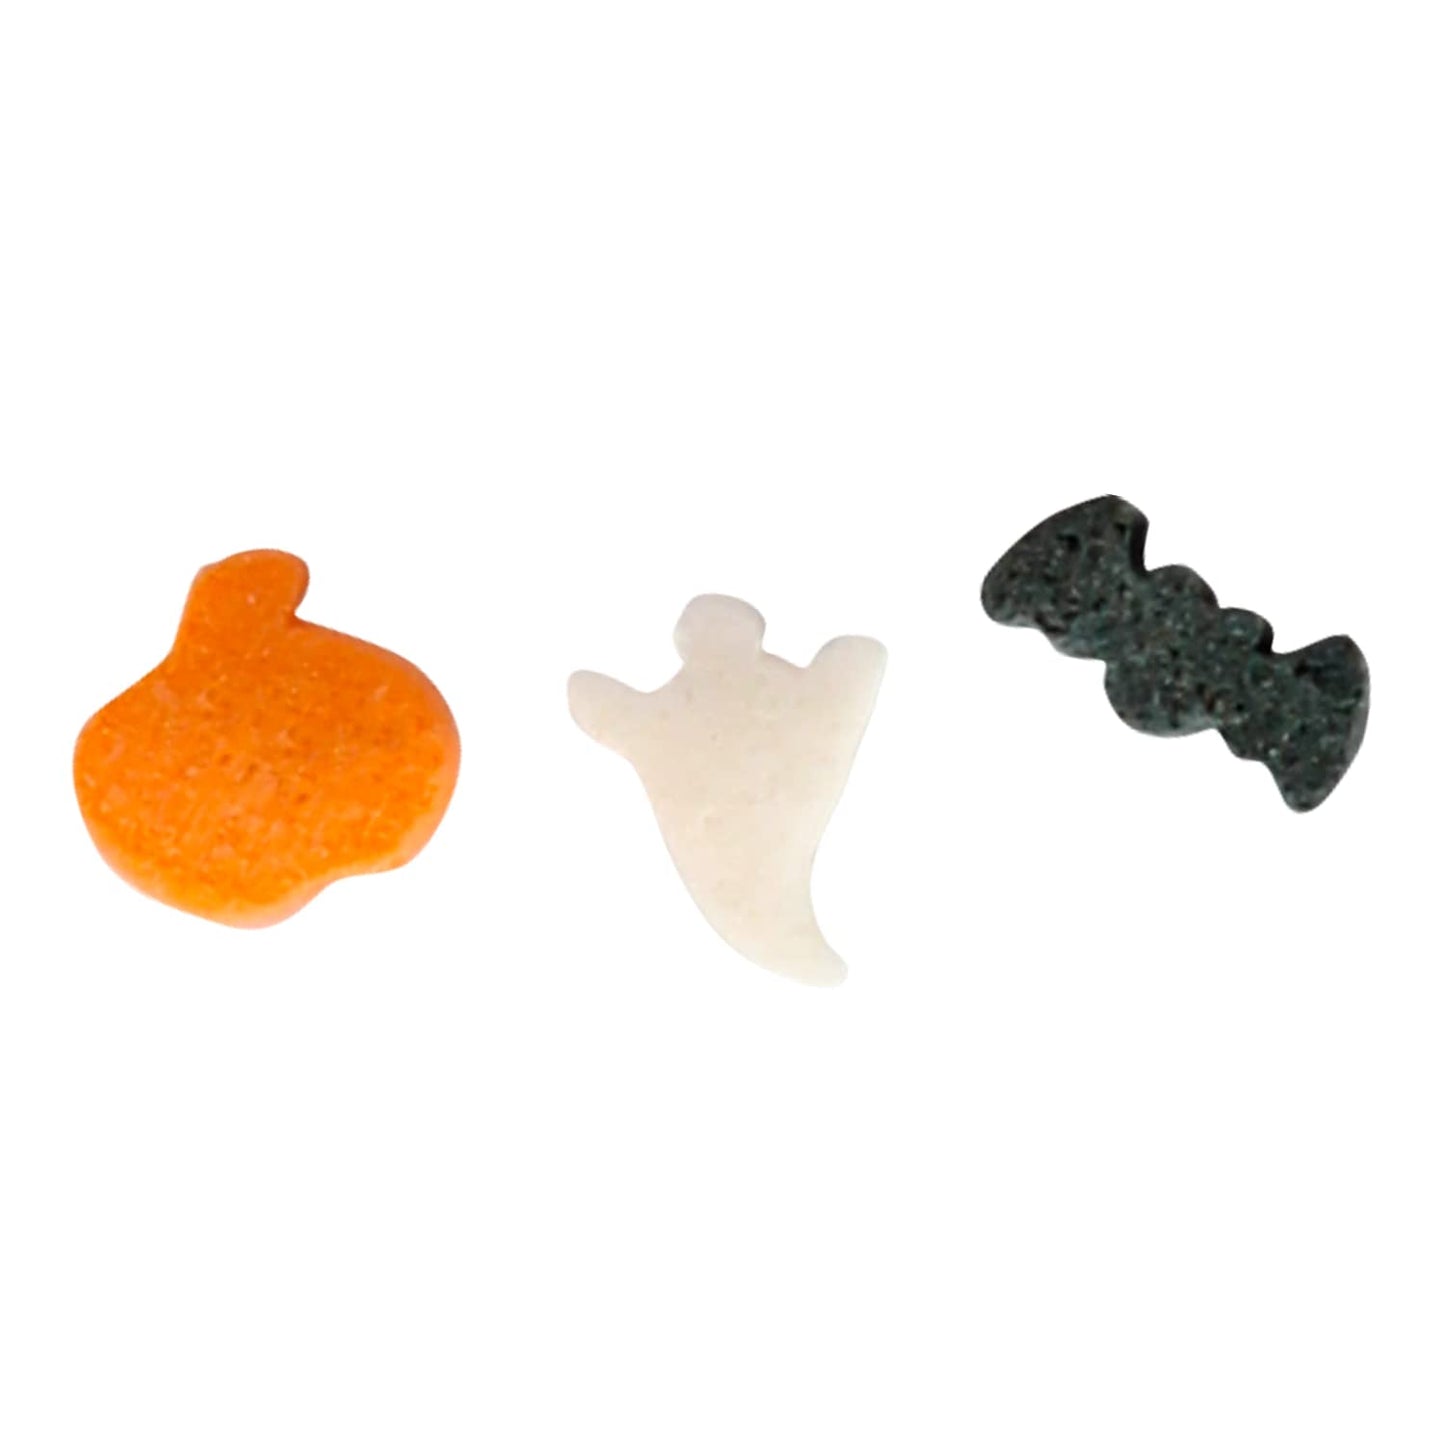 Halloween Confetti Sprinkles Bulk - 1.7 LB - Bat, Pumpkin & Ghosts Sprinkles - Spooky Toppings - Great for Cookies, Cupcakes, Fall